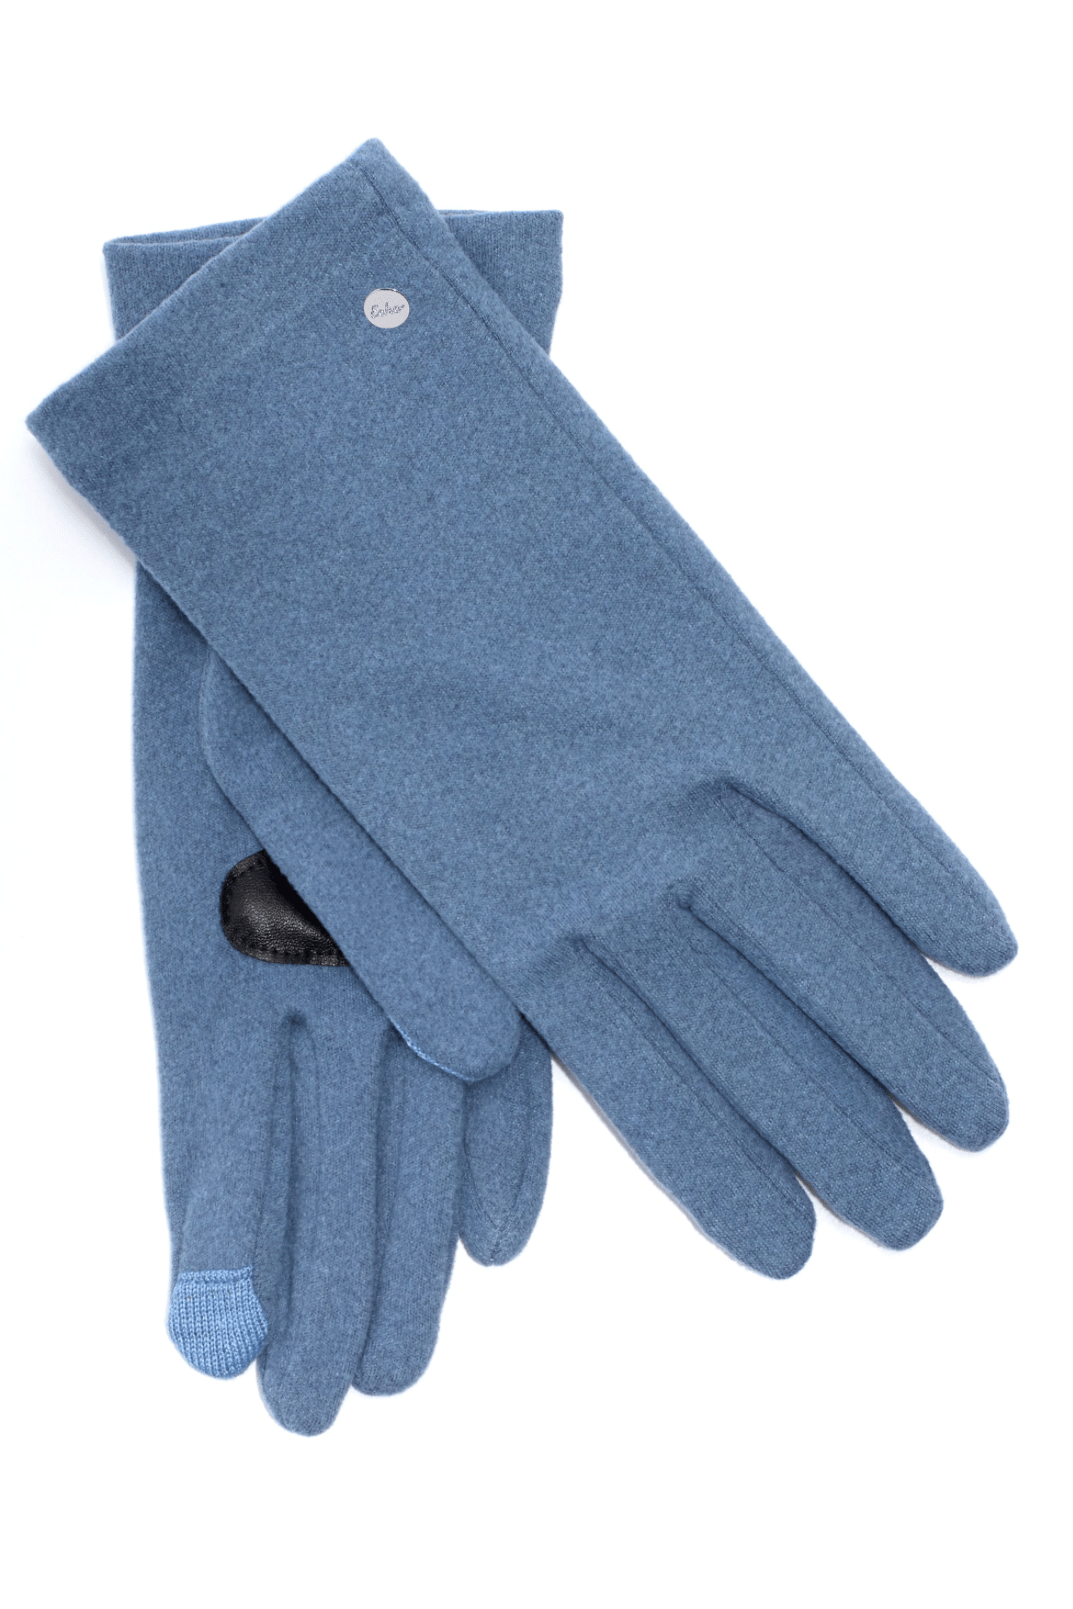 ECHO Comfort Stretch Touch Glove EG0174 *Final Sale*